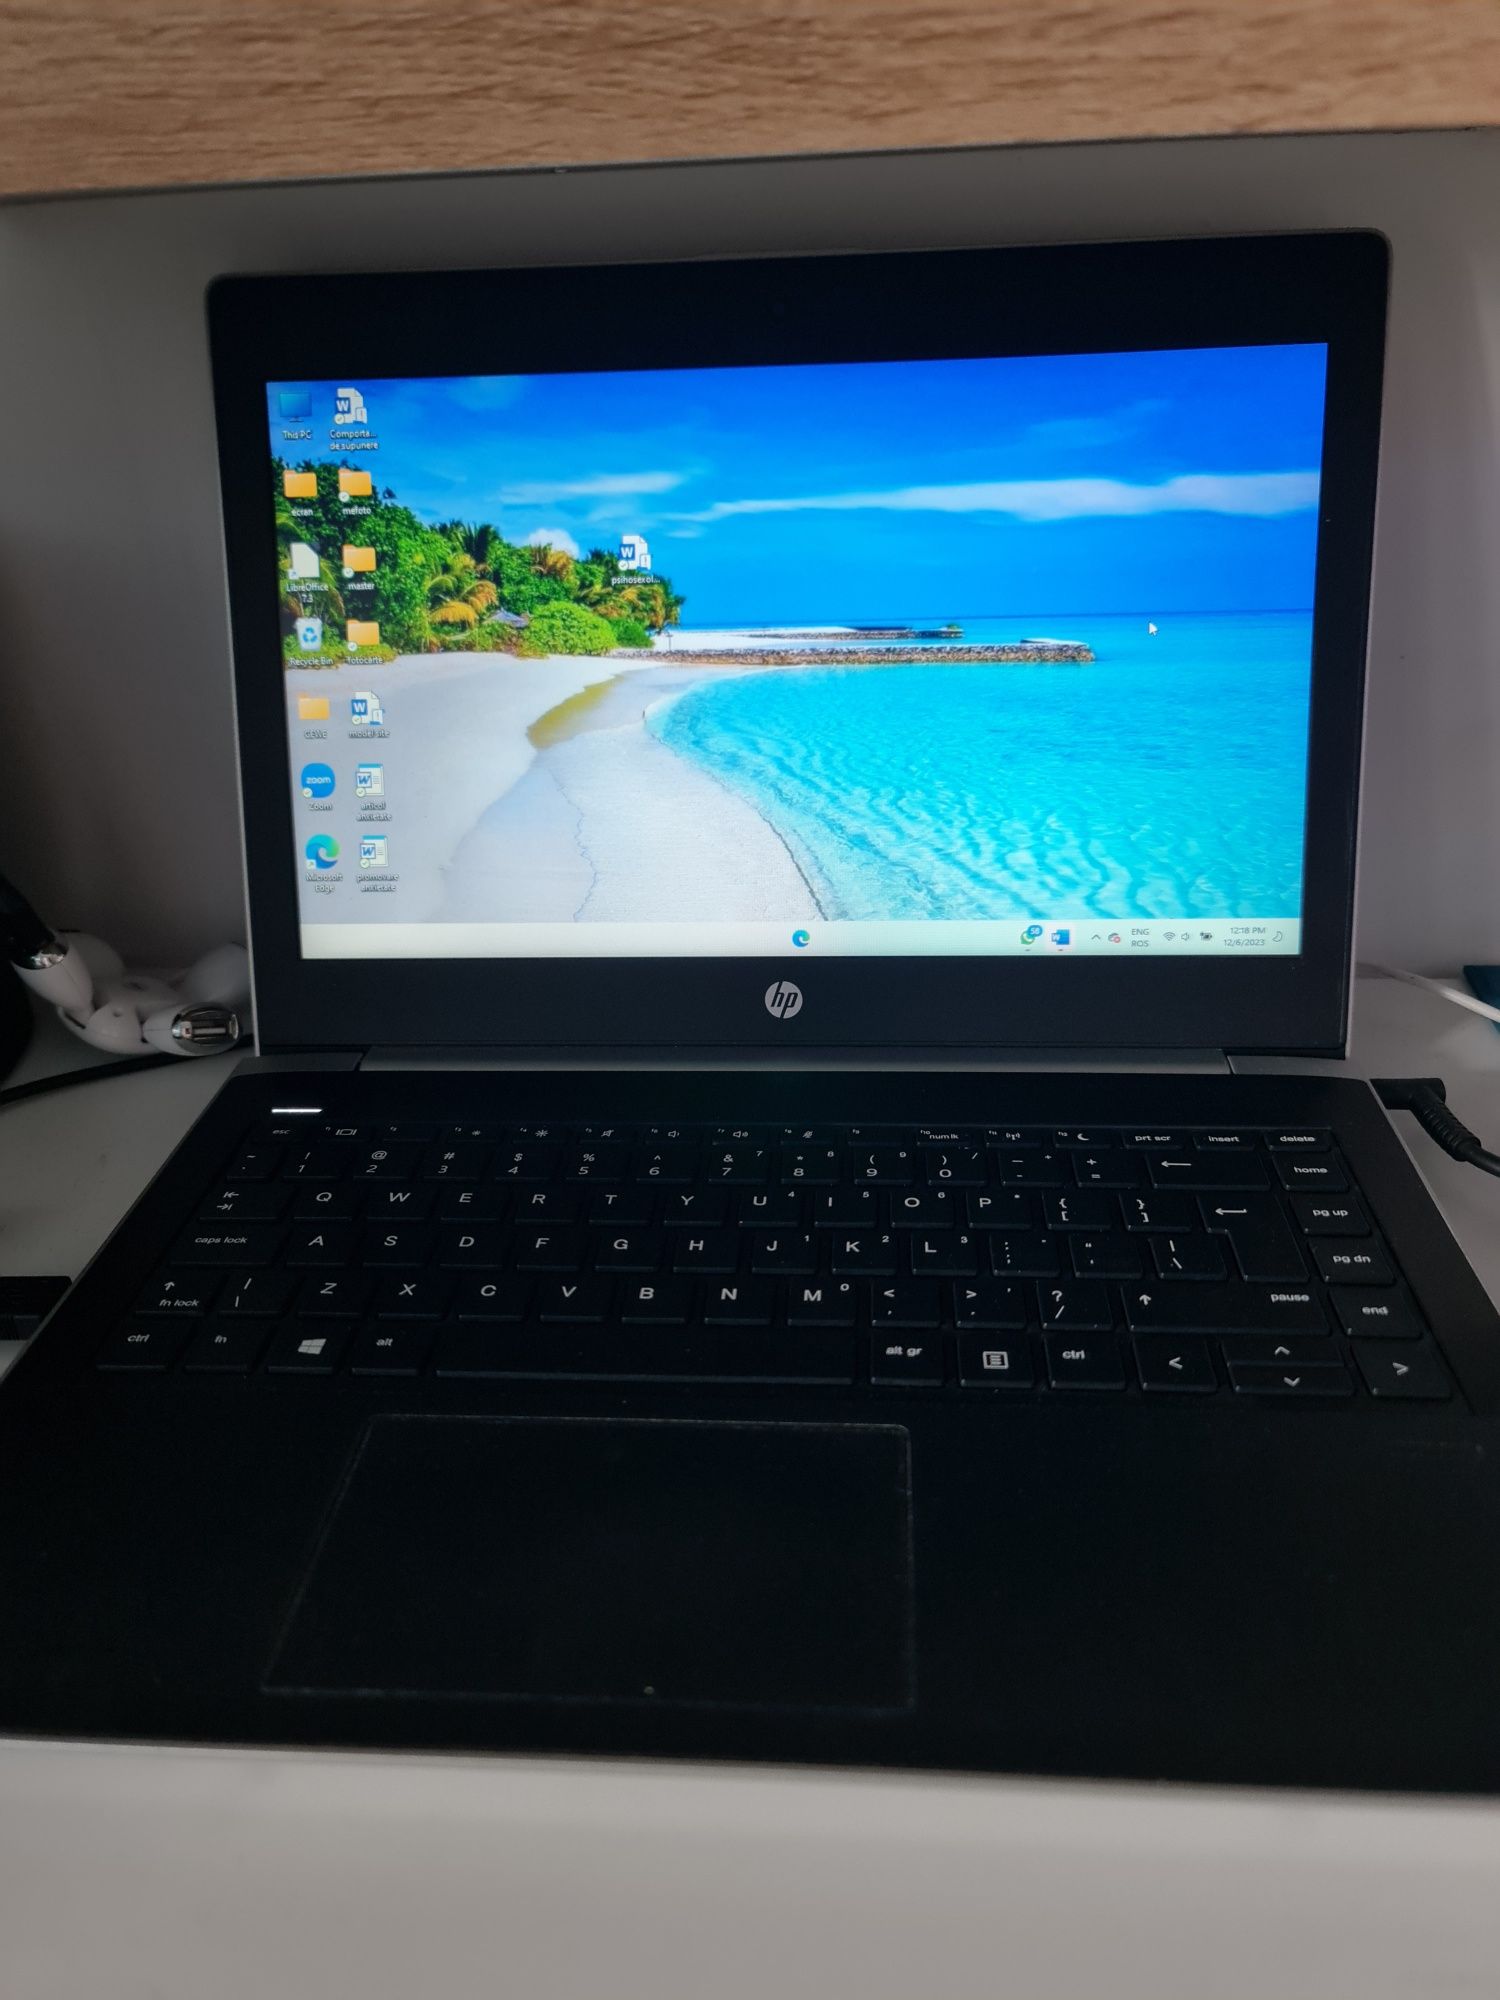 Laptop HP Pro Book 430 G5 i3 4gb DDR4 13.3 inch